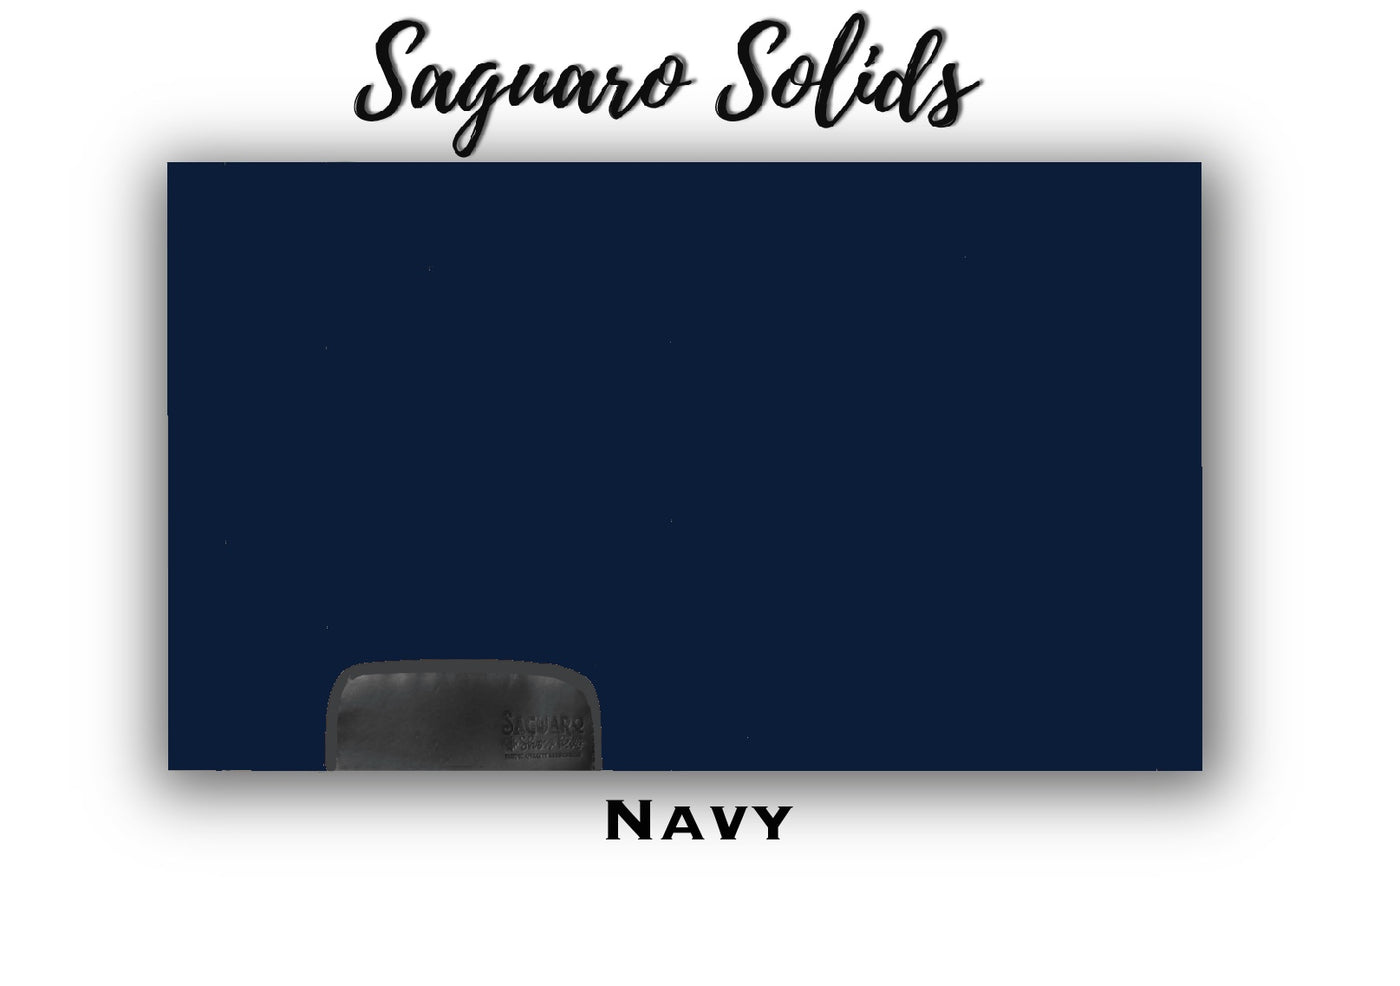 Saguaro Solid "Navy" Show Pad (SEMI-CUSTOM)